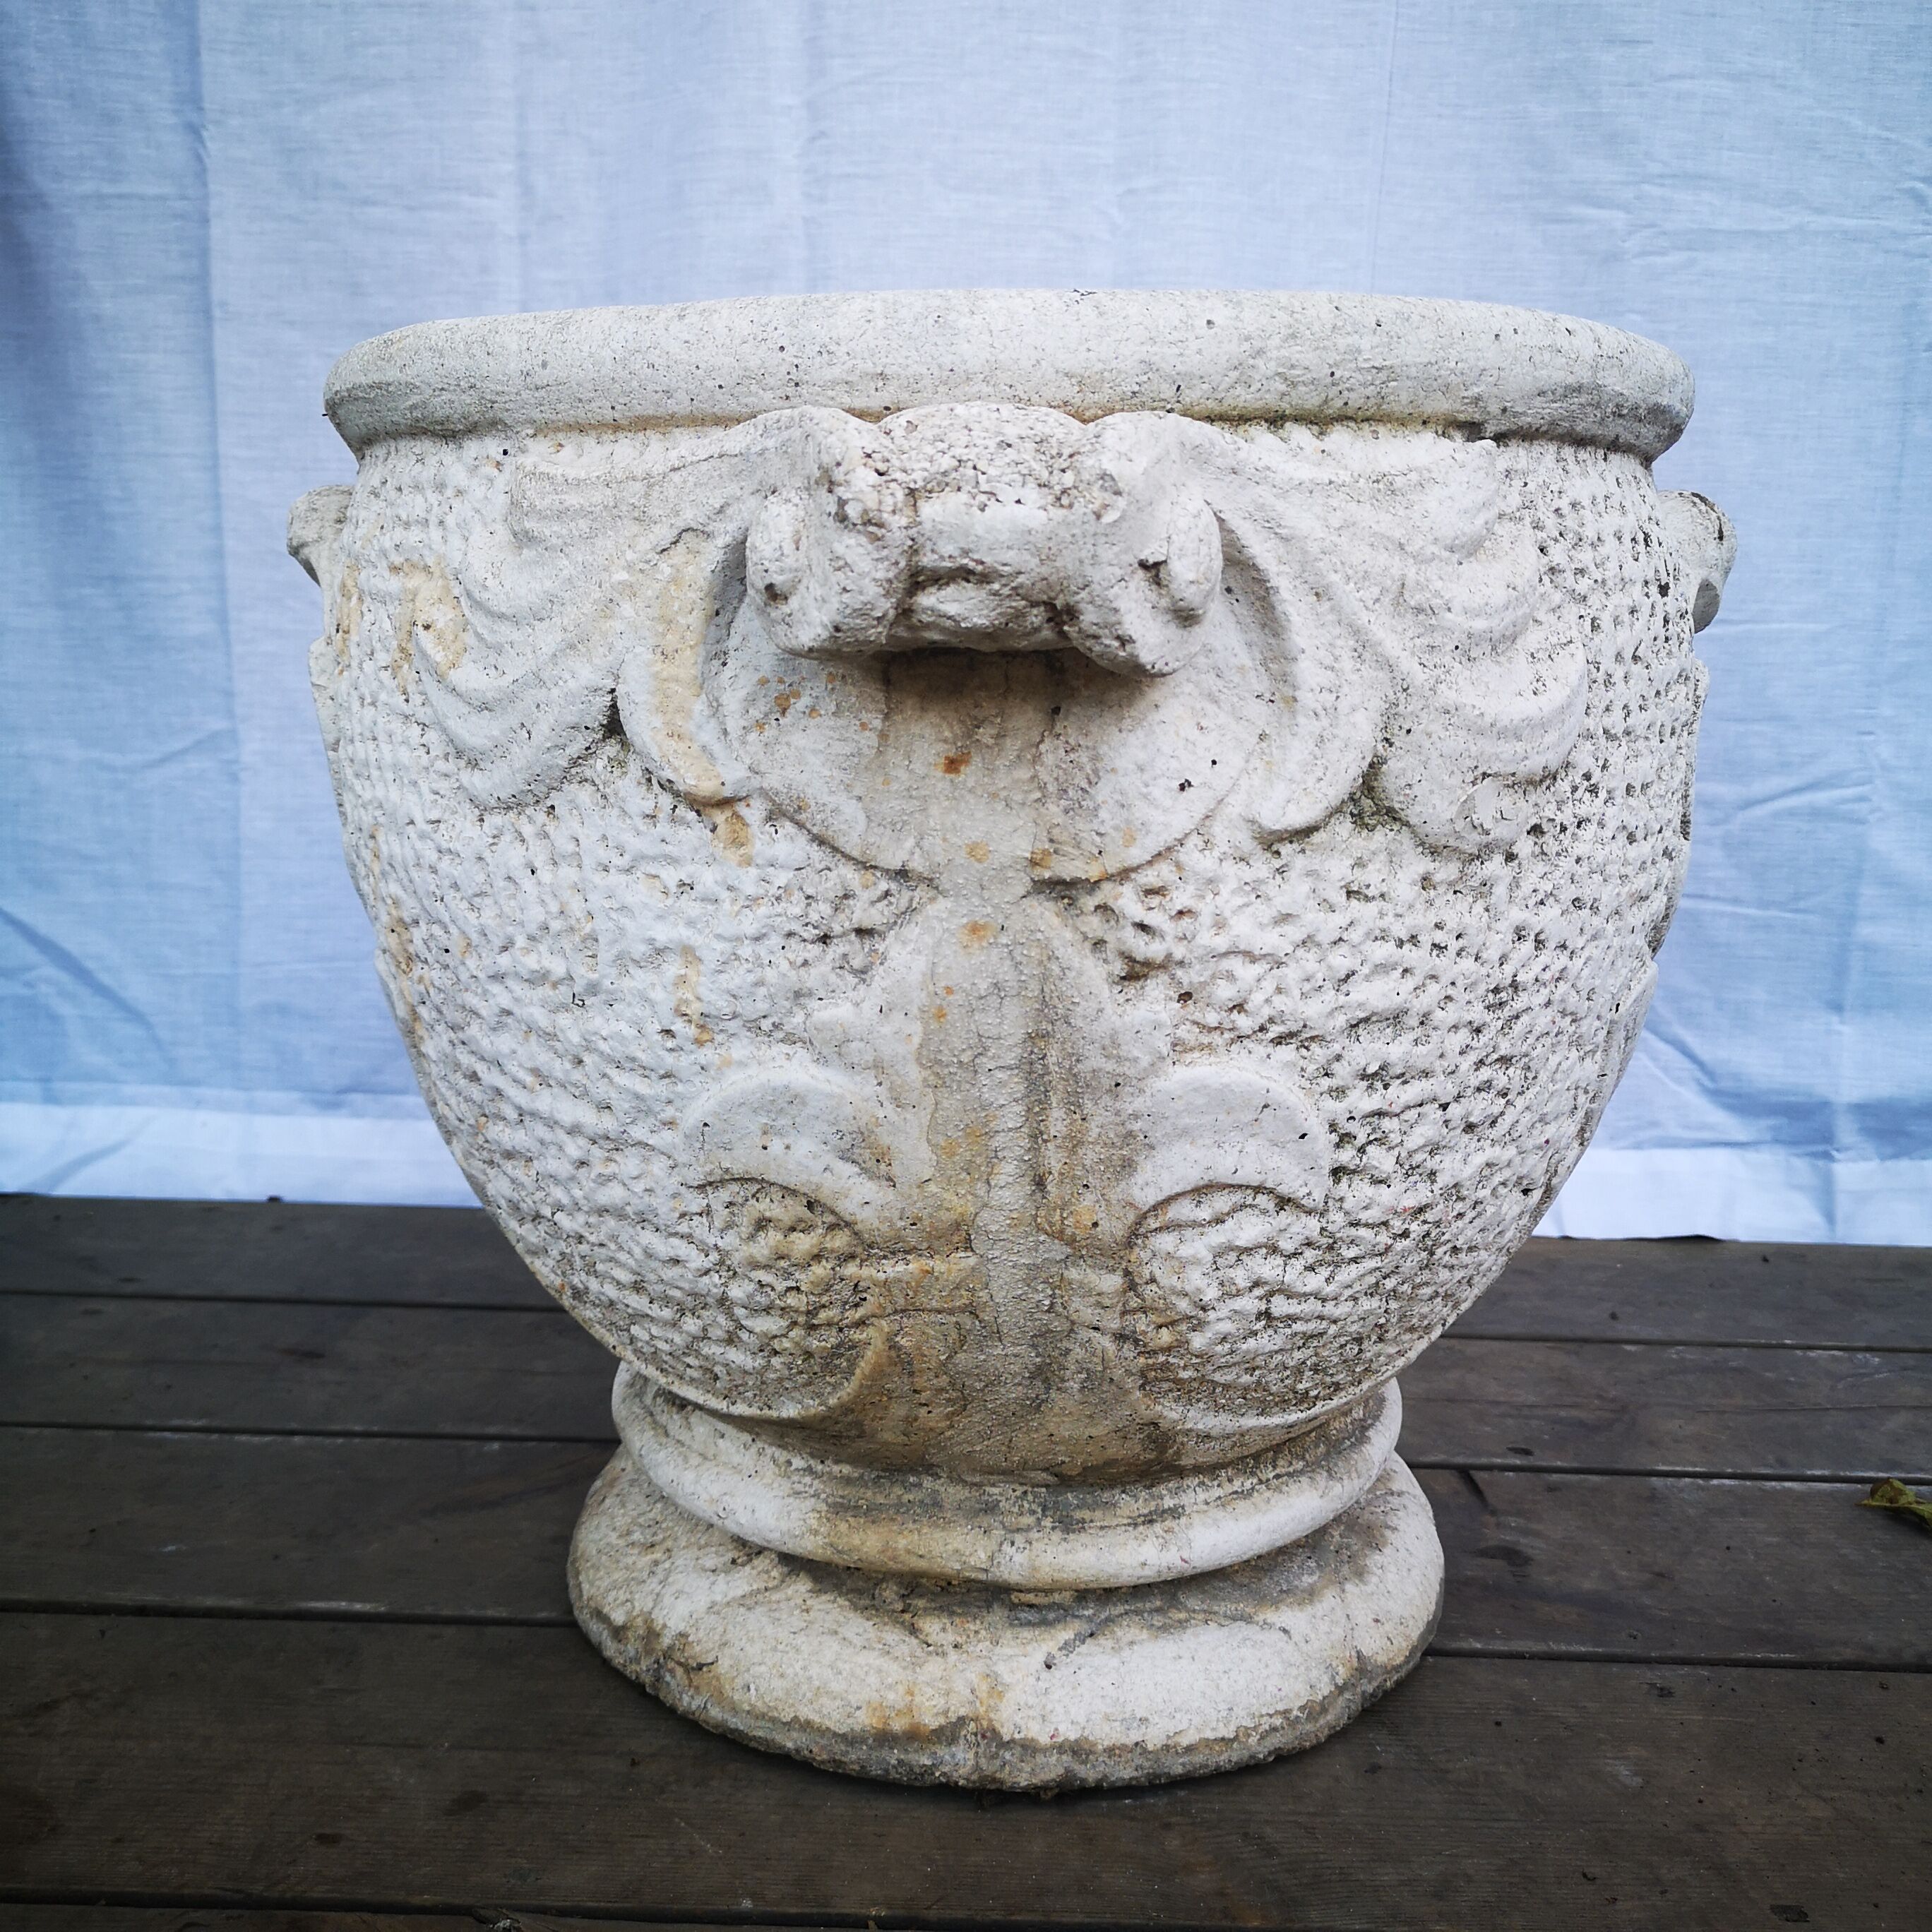 trinket bowl concrete candle with lid vintage pots flower pot Concrete pot with lid bird pot